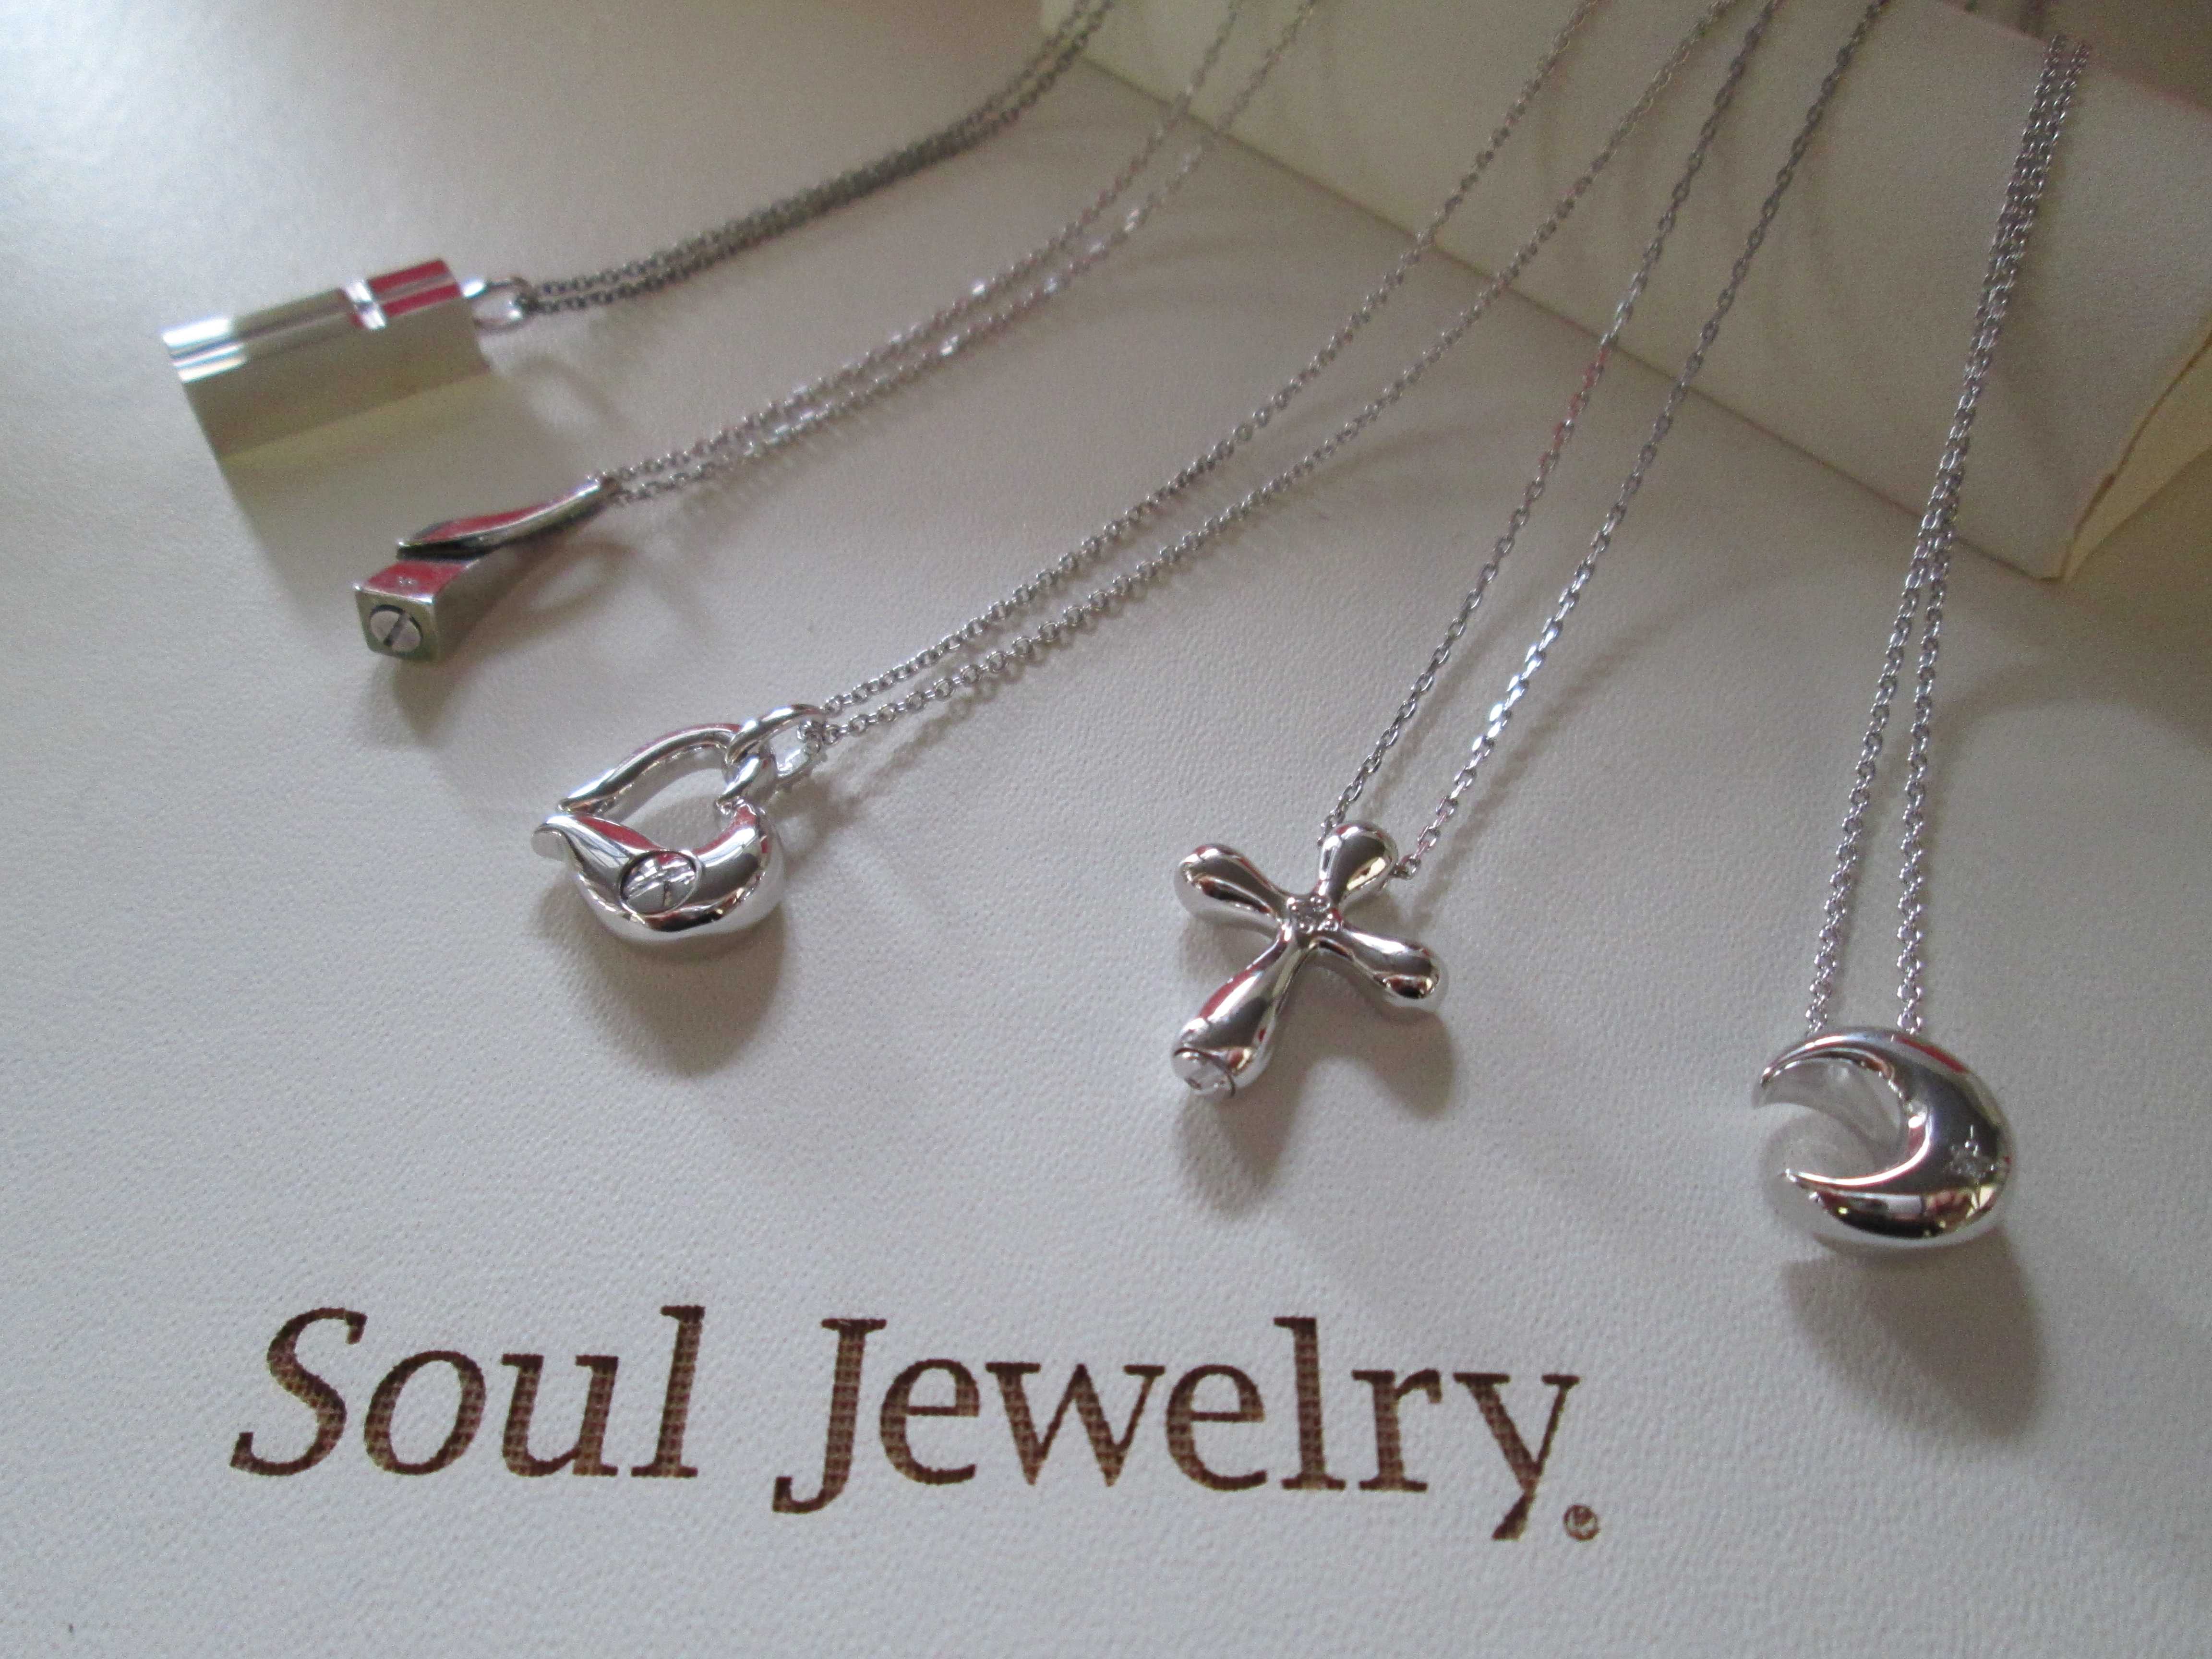 Soul jewelry 【 ソウルジュエリー 】 | 鶴仏壇店の一日 - 楽天ブログ